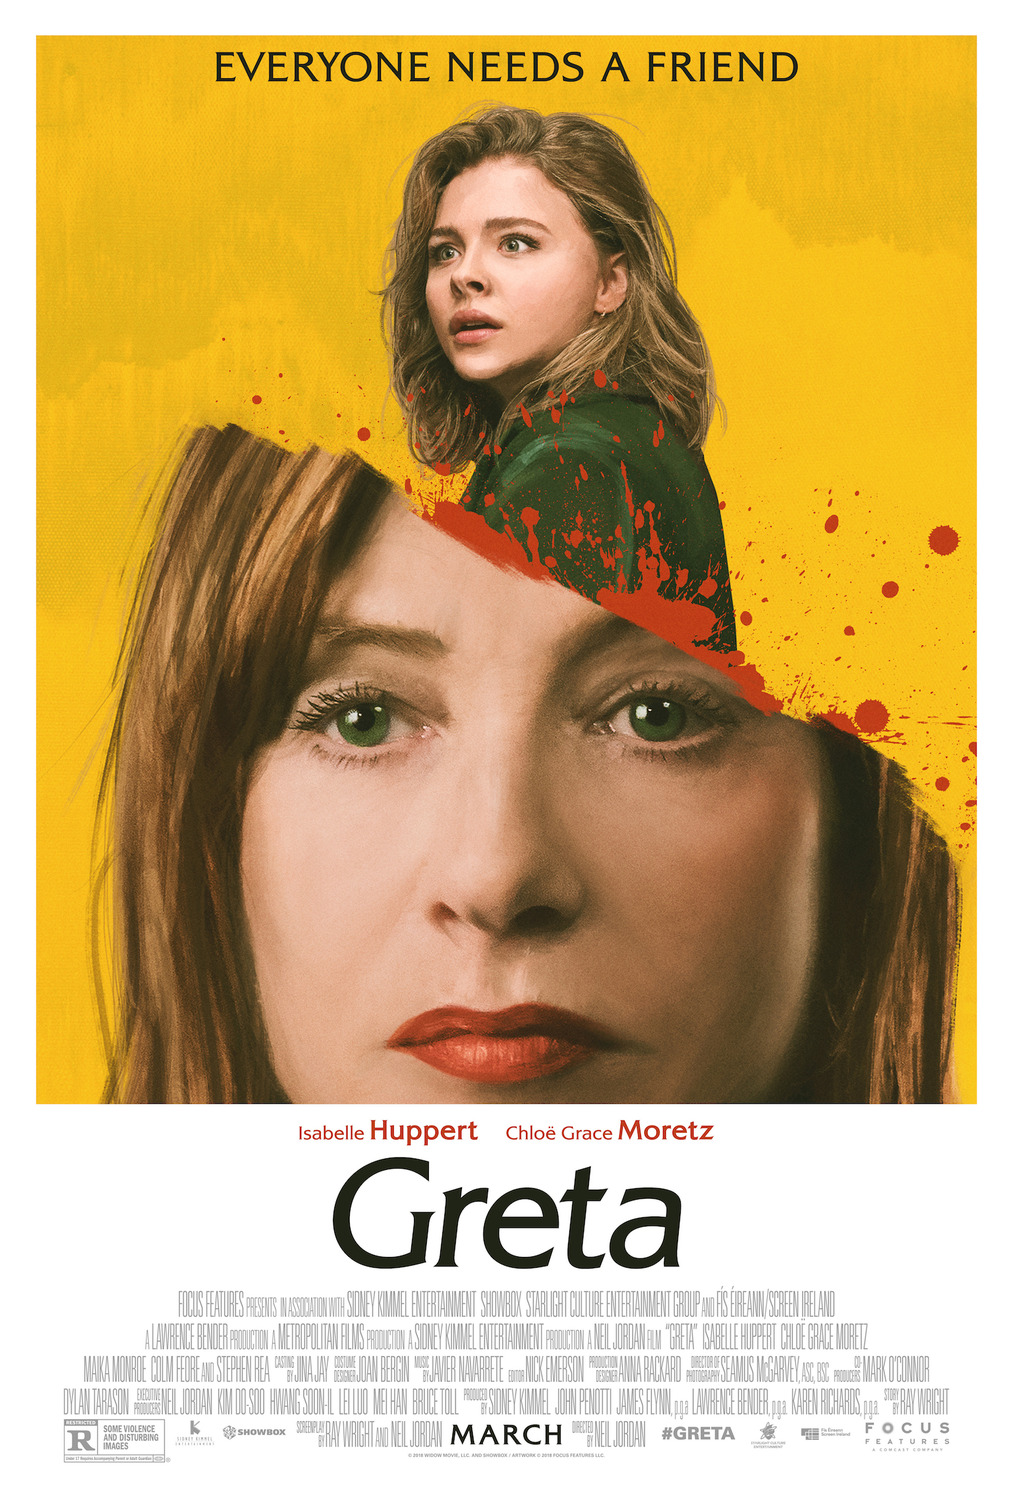 Chloë Grace Moretz changed her look for 'Greta